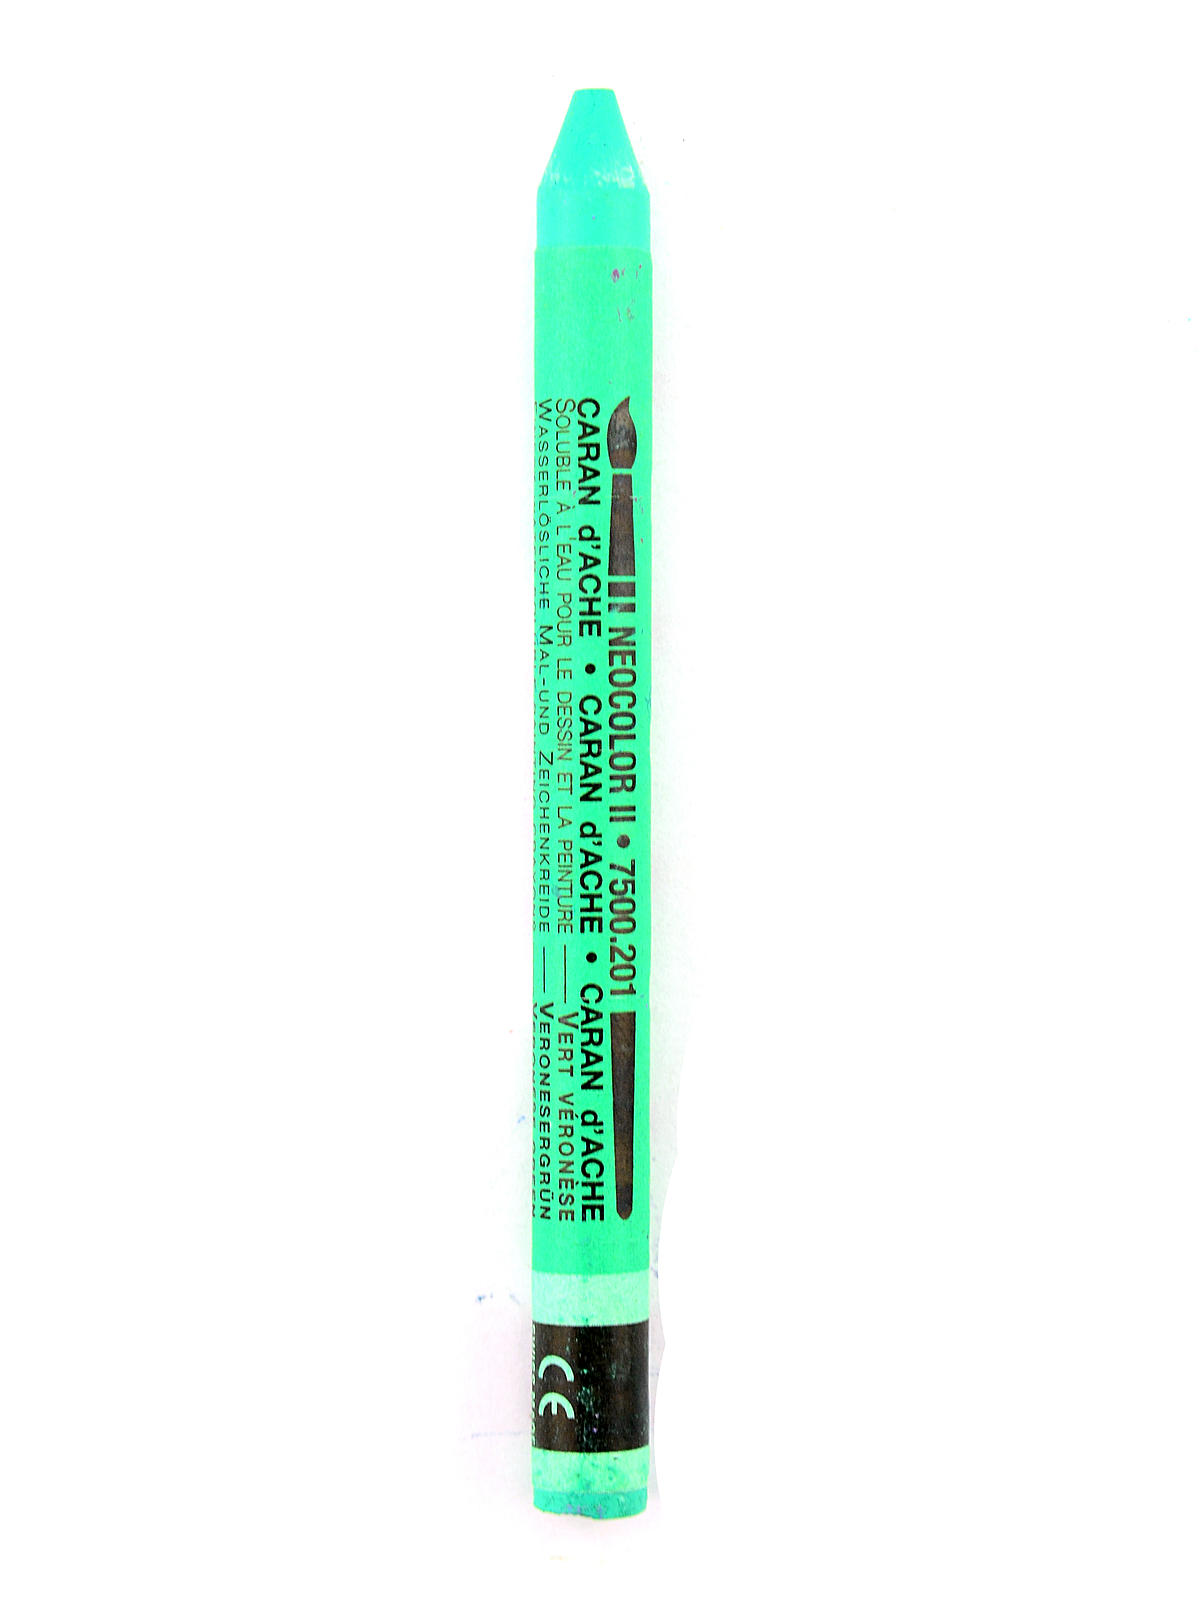 Neocolor Ii Aquarelle Water Soluble Wax Pastels Veronese Green